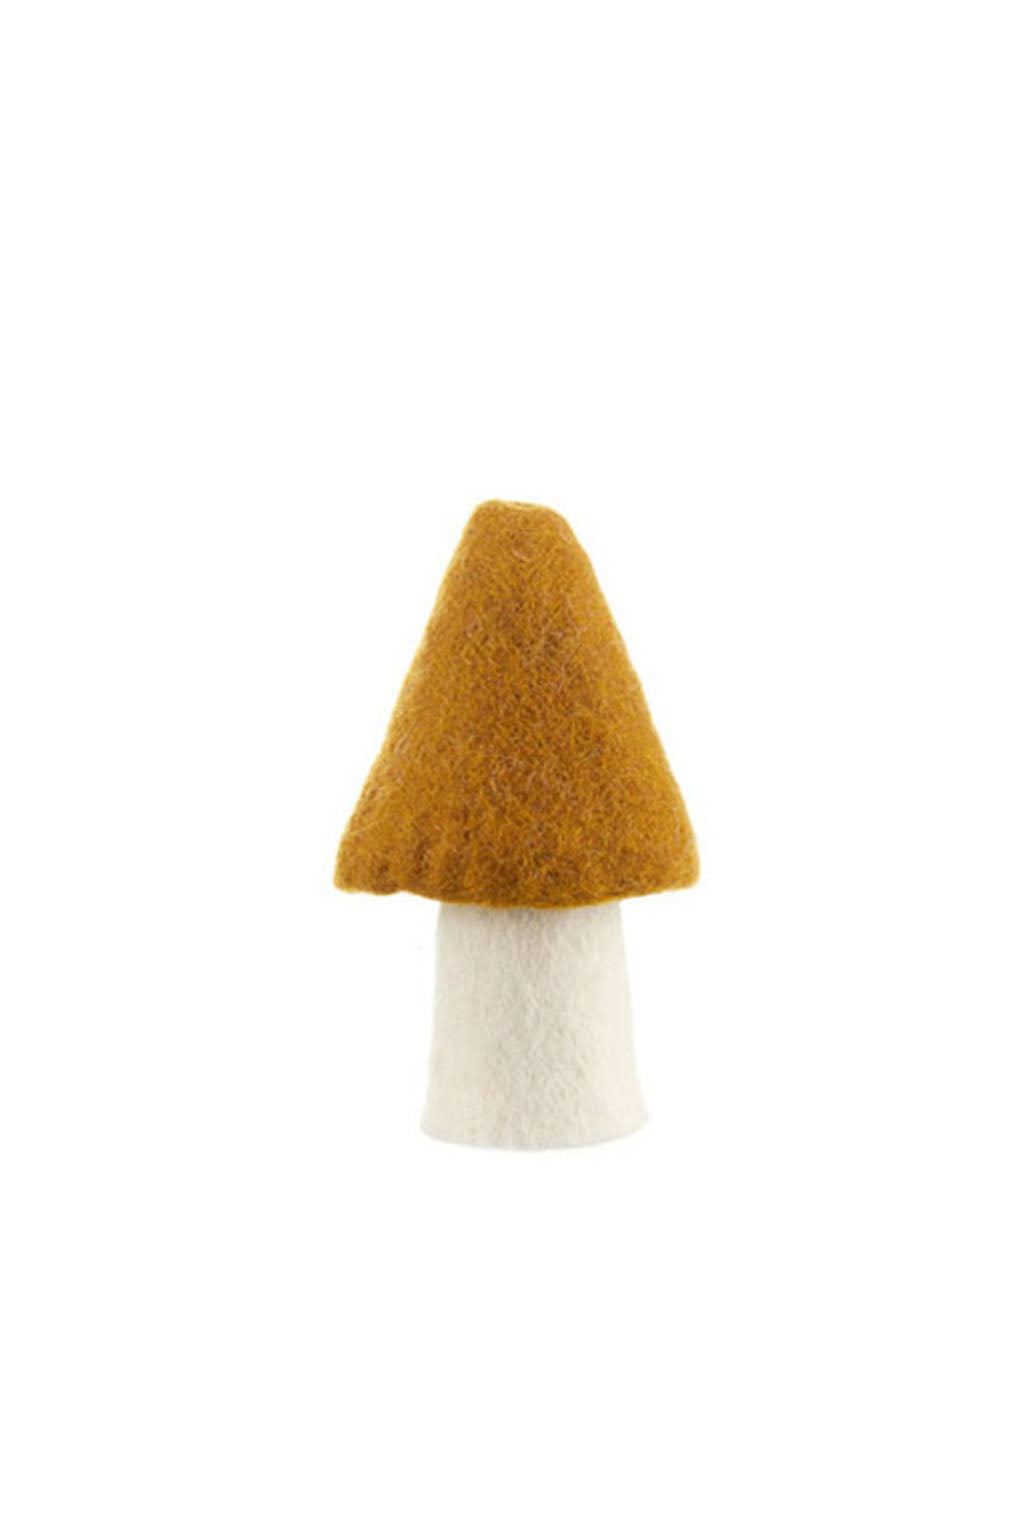 Morel Mushroom - Large 13cm